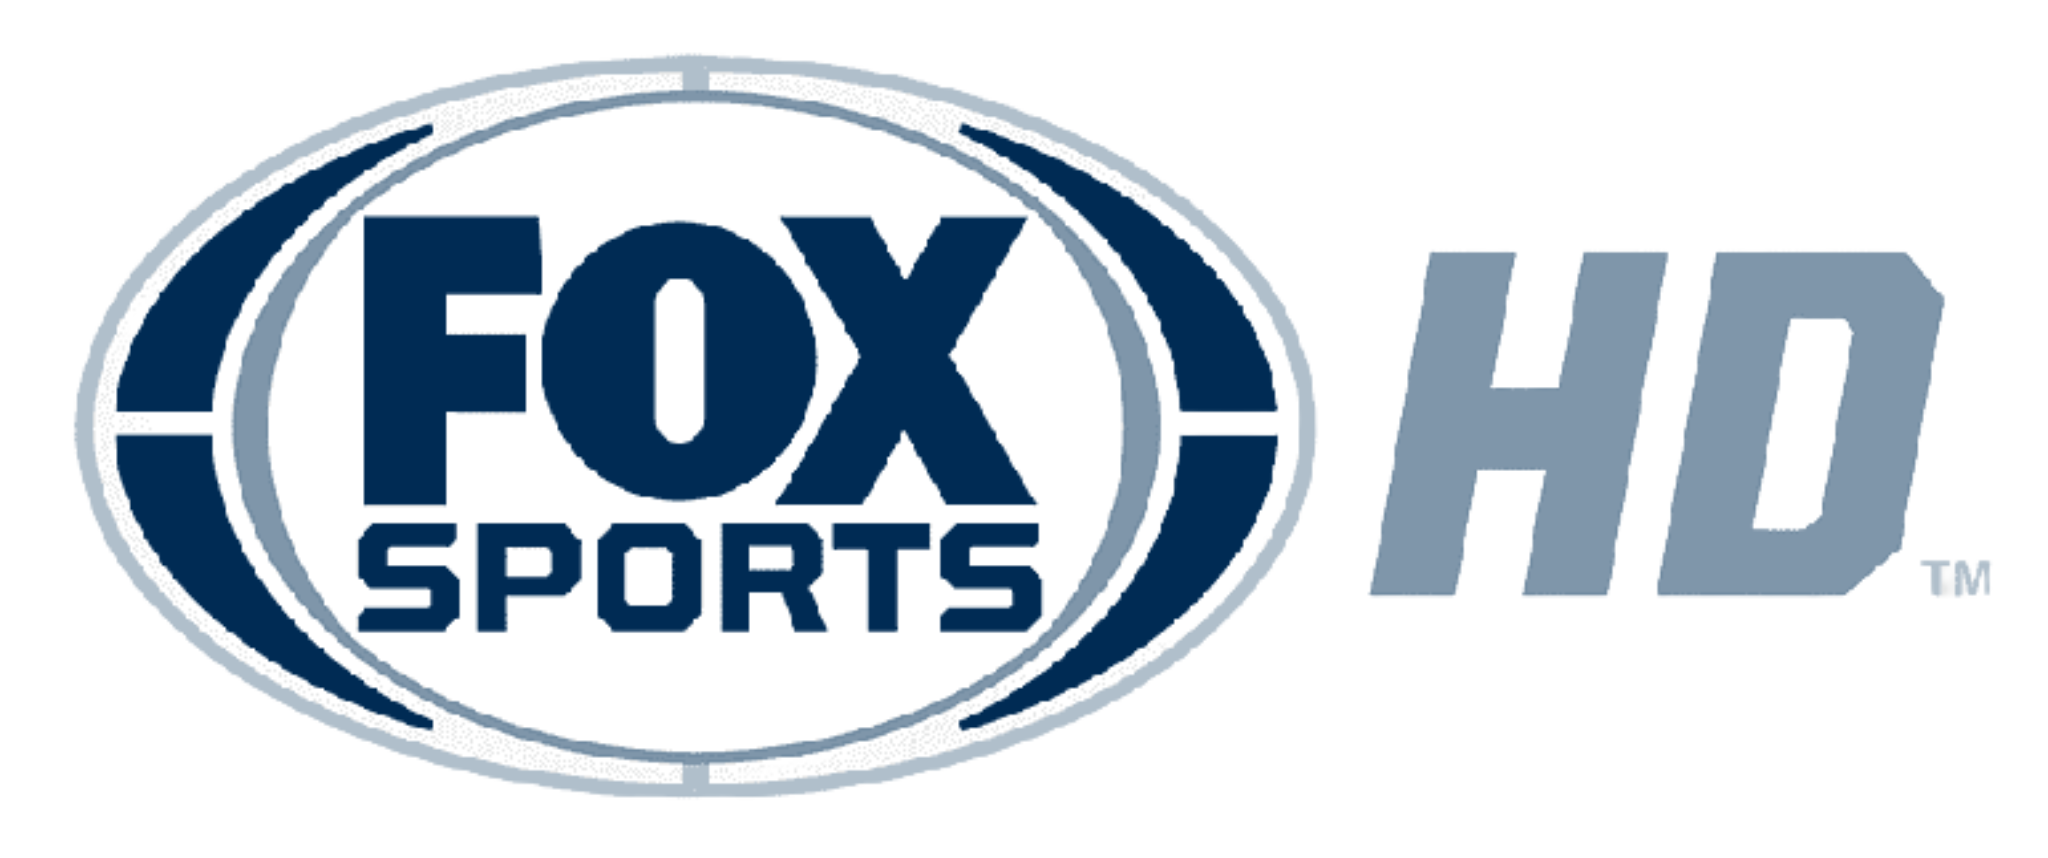 fox-sports-logo-png-removebg-preview